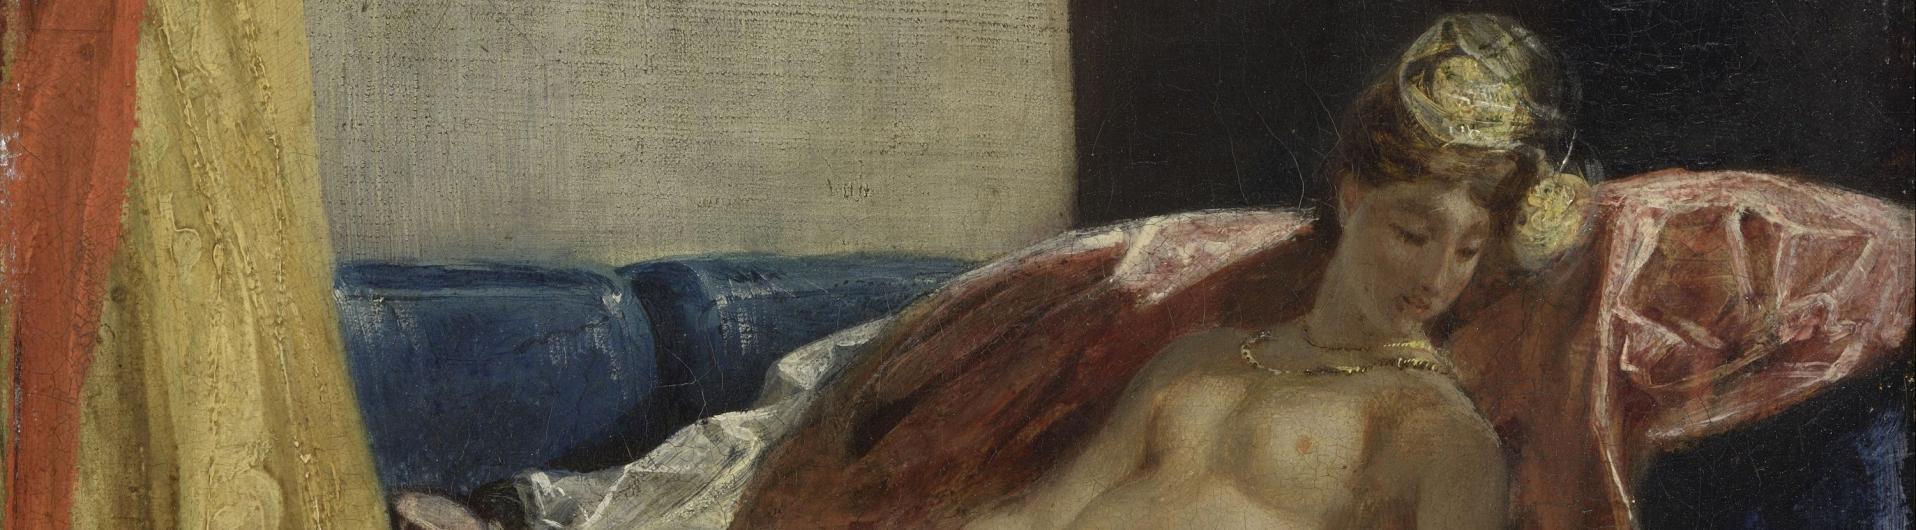 Eugène Delacroix, Femme carressant un perroquet,1827.